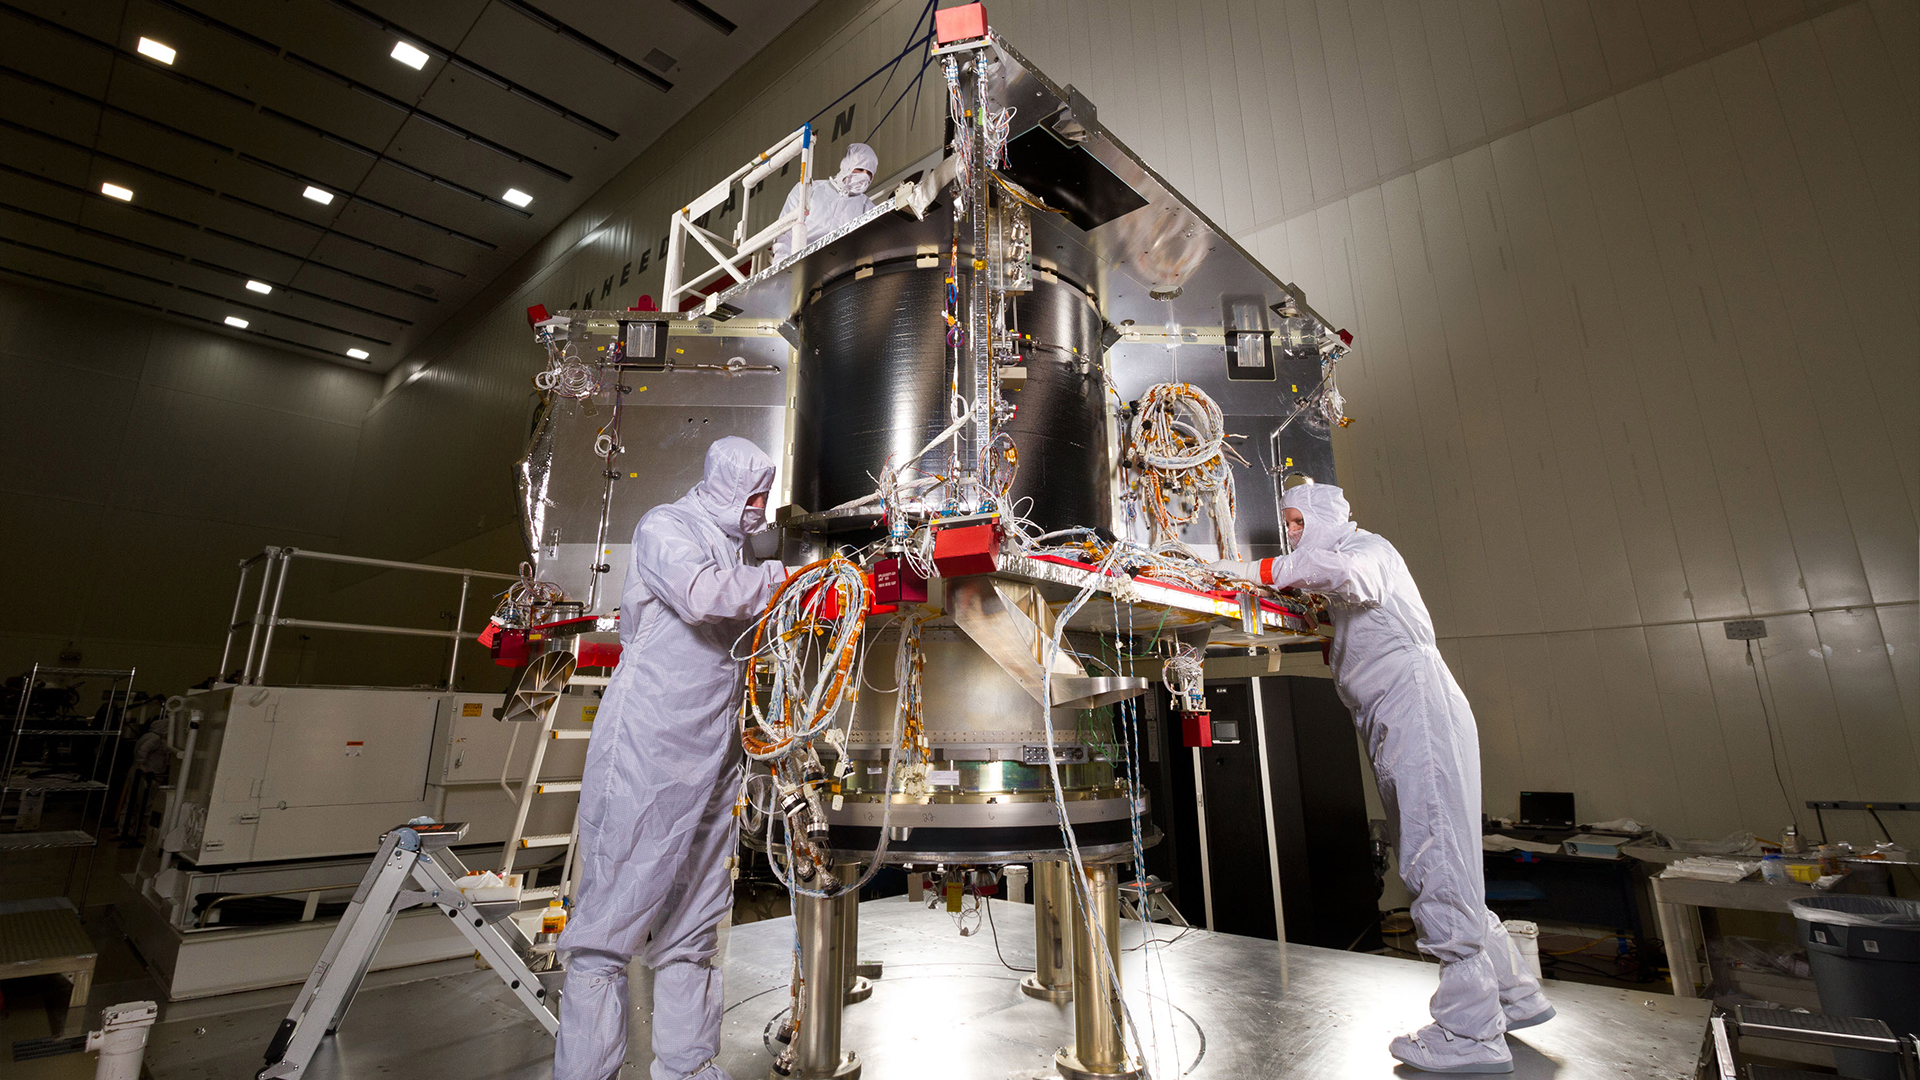 Technicians assemble the OSIRIS-REx spacecraft in a Lockheed Martin Space clean room facility near Denver, Colorado.